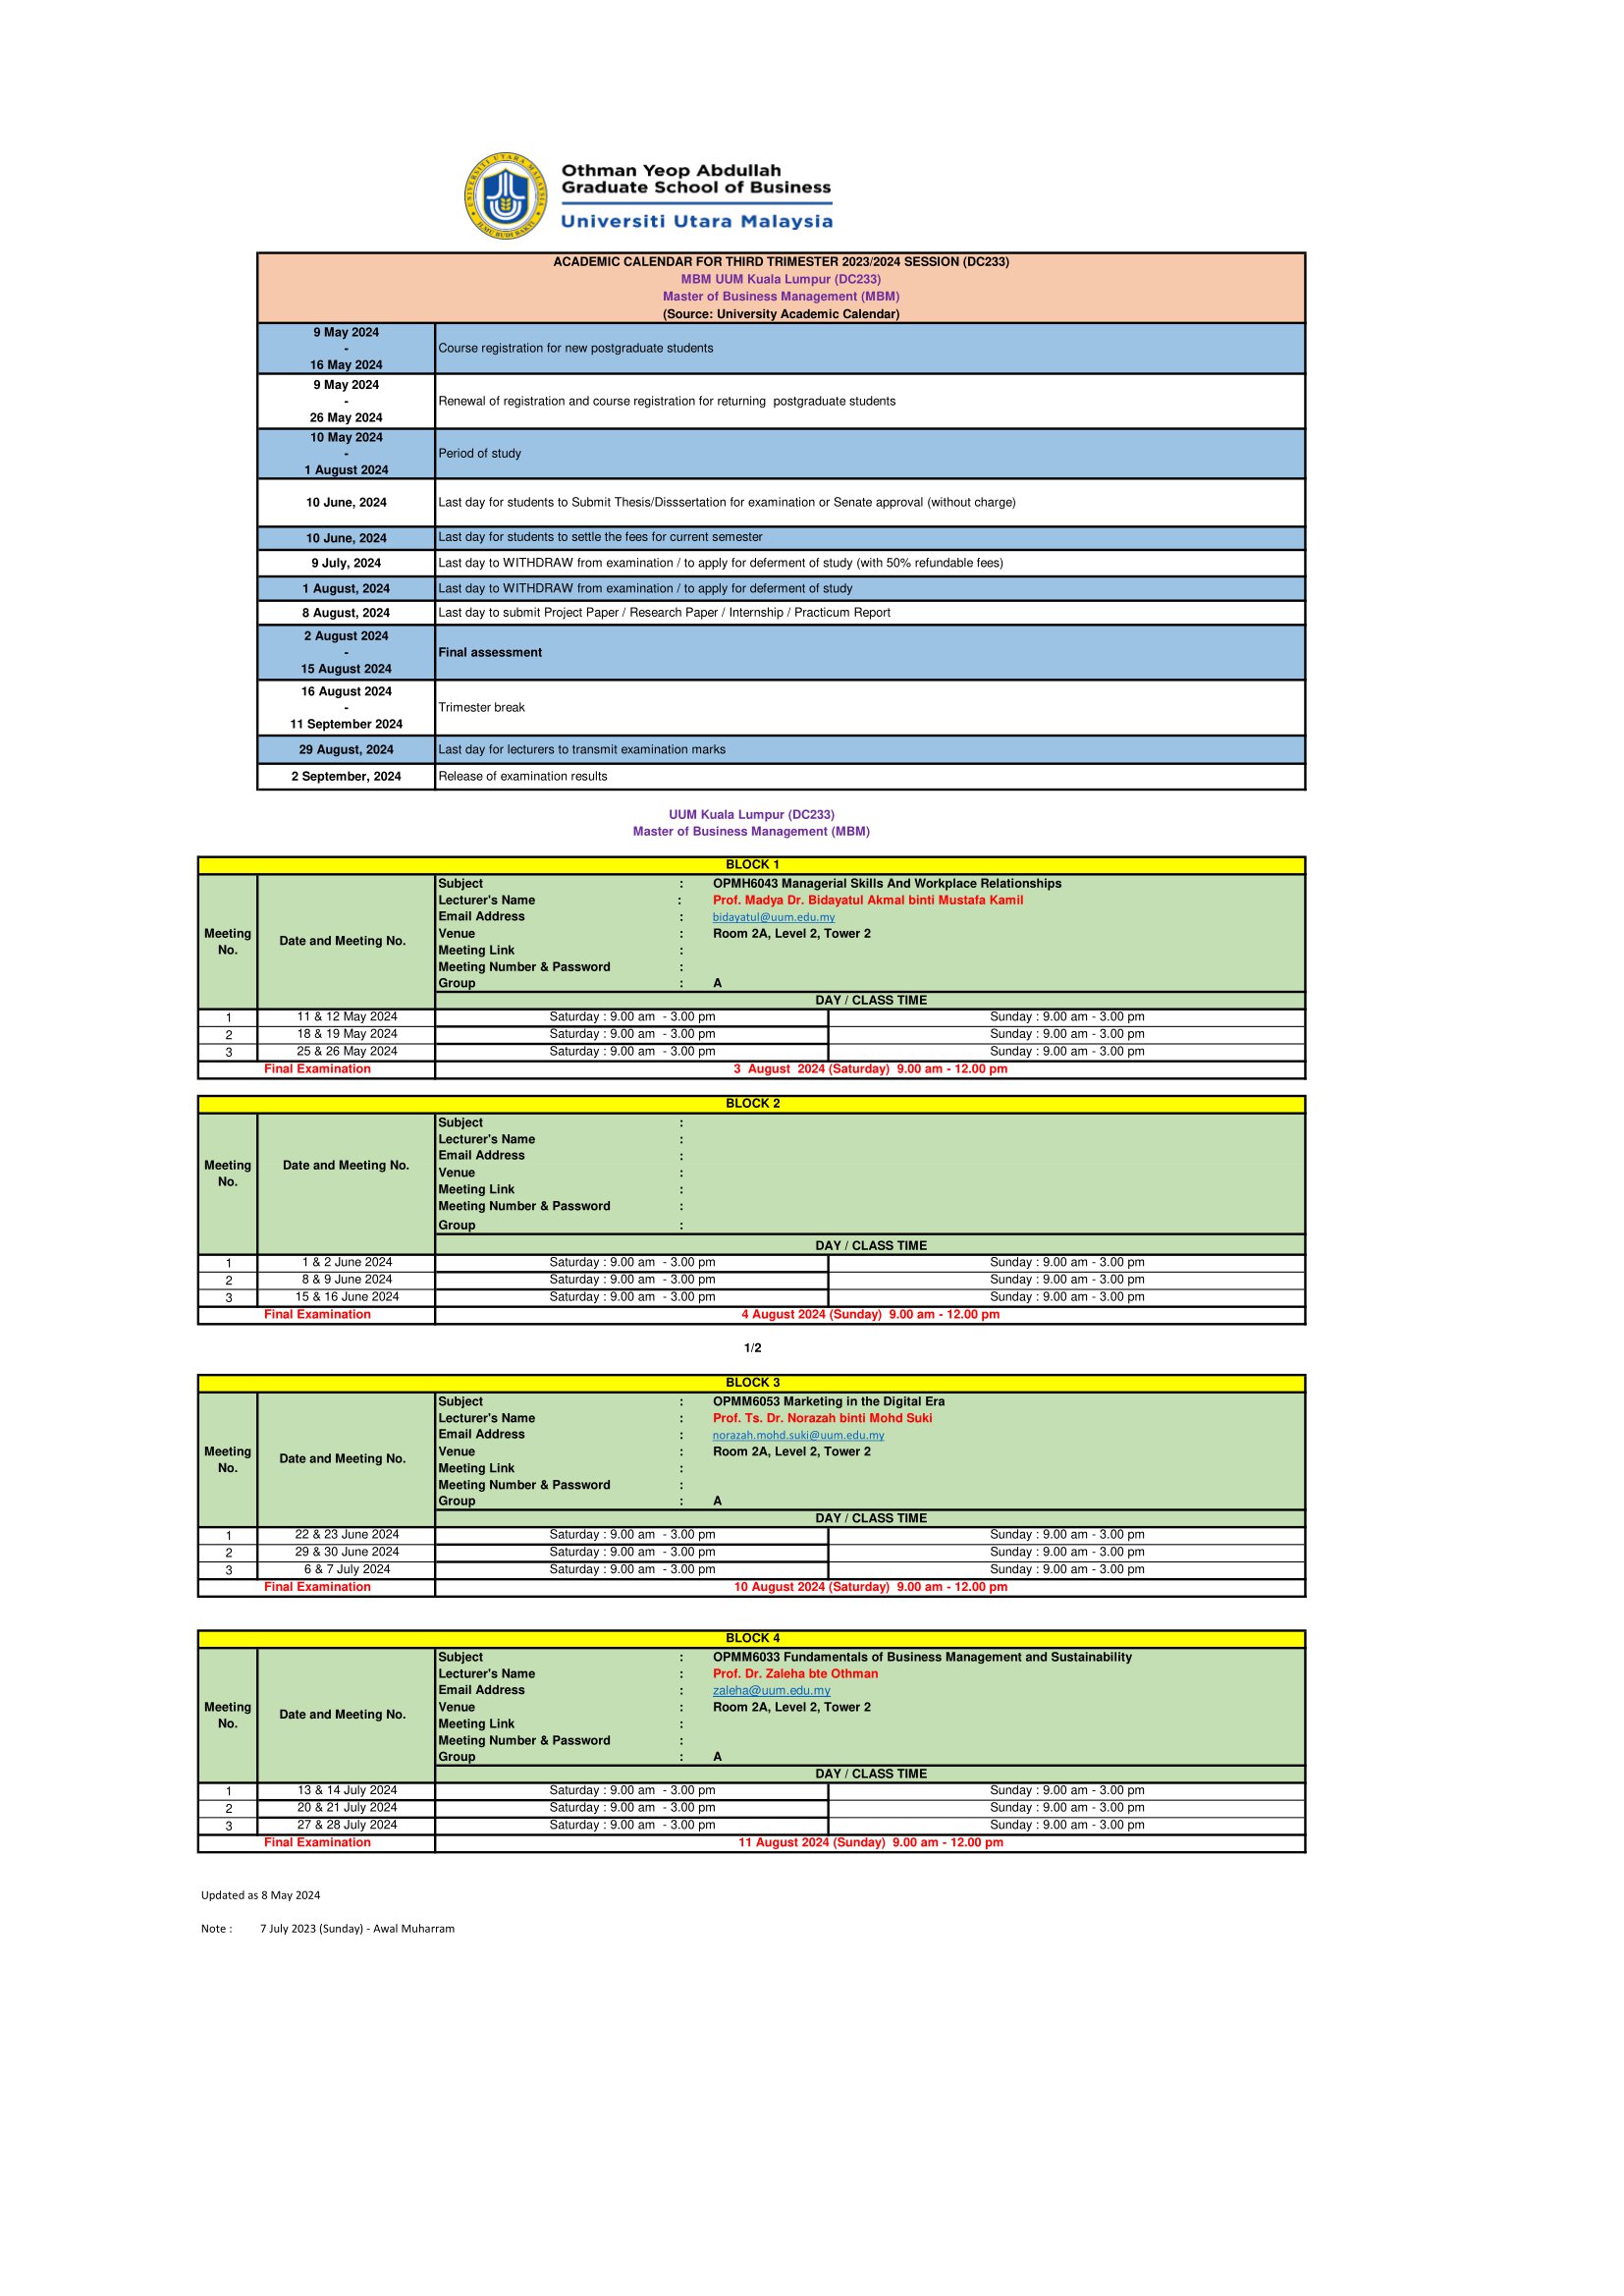 mbm-class-timetable-233-edited